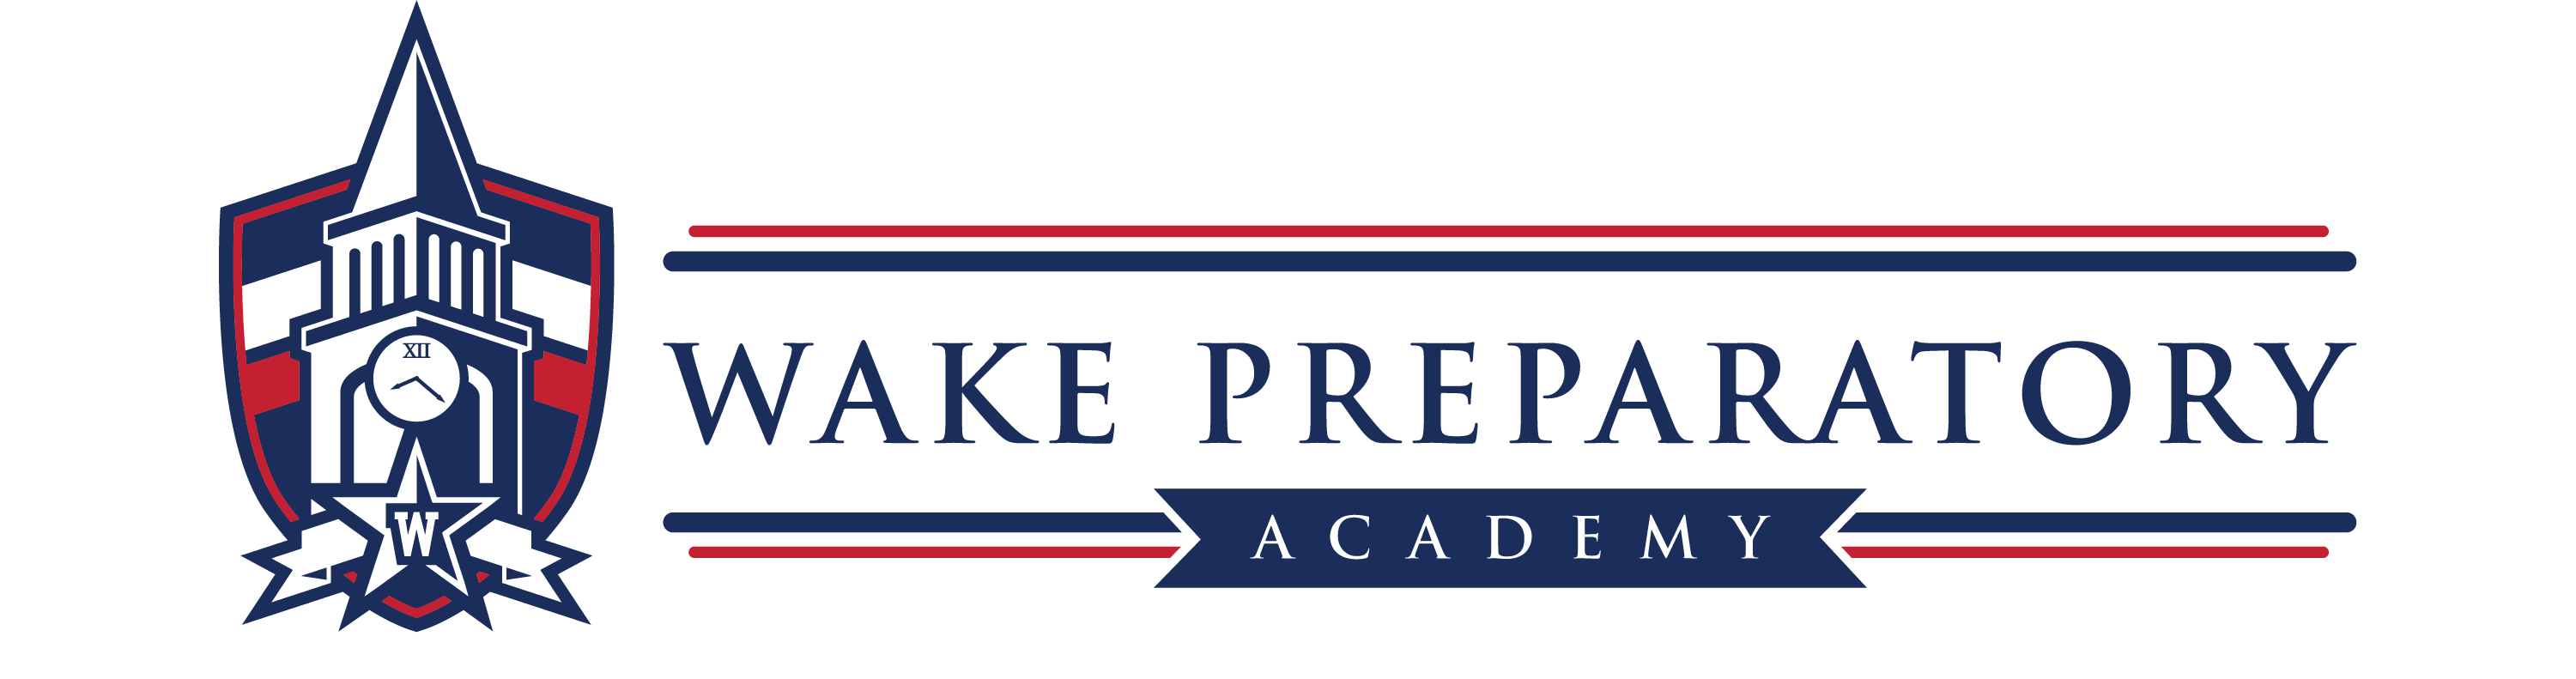 Wake Preparatory Academy logo